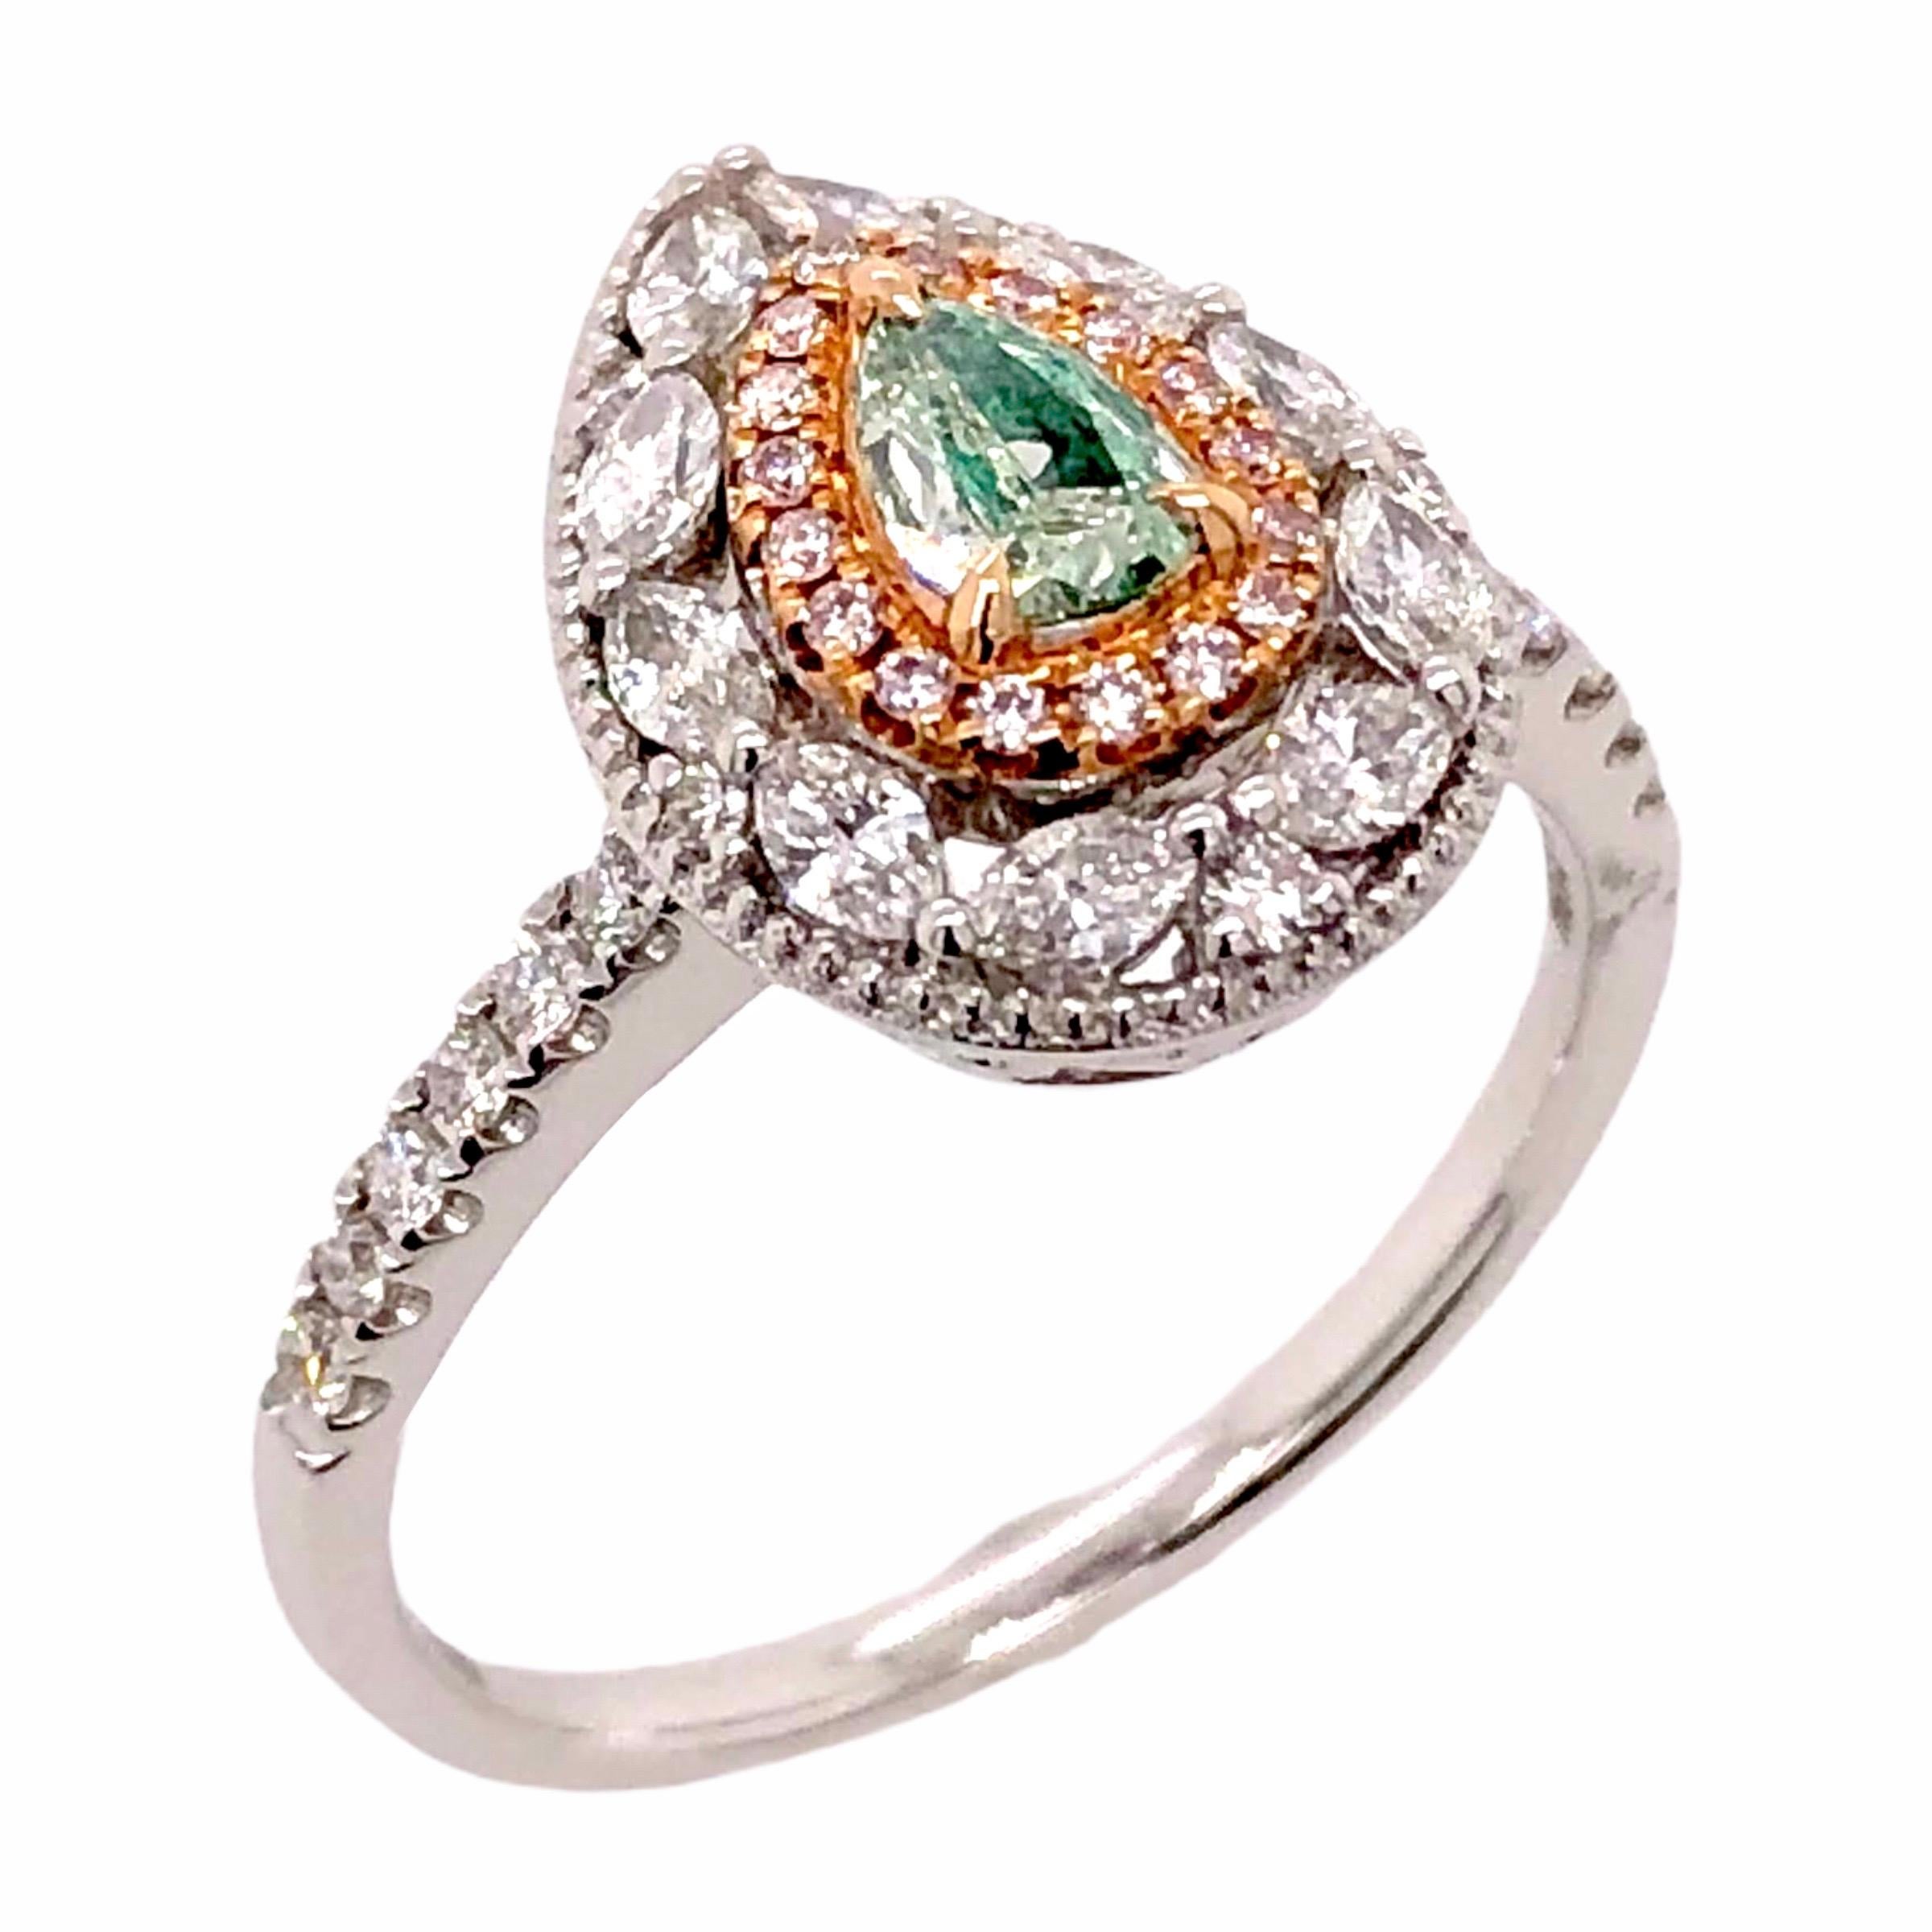 PARIS Craft House Fancy Green Diamond Ring in 18 Karat White Gold.

- 1 Pear-cut Green Diamond/0.20ct
- Mixed-cut Diamonds/0.53ct
- 18K White Gold/3.23g

Designed and crafted at PARIS Craft House.